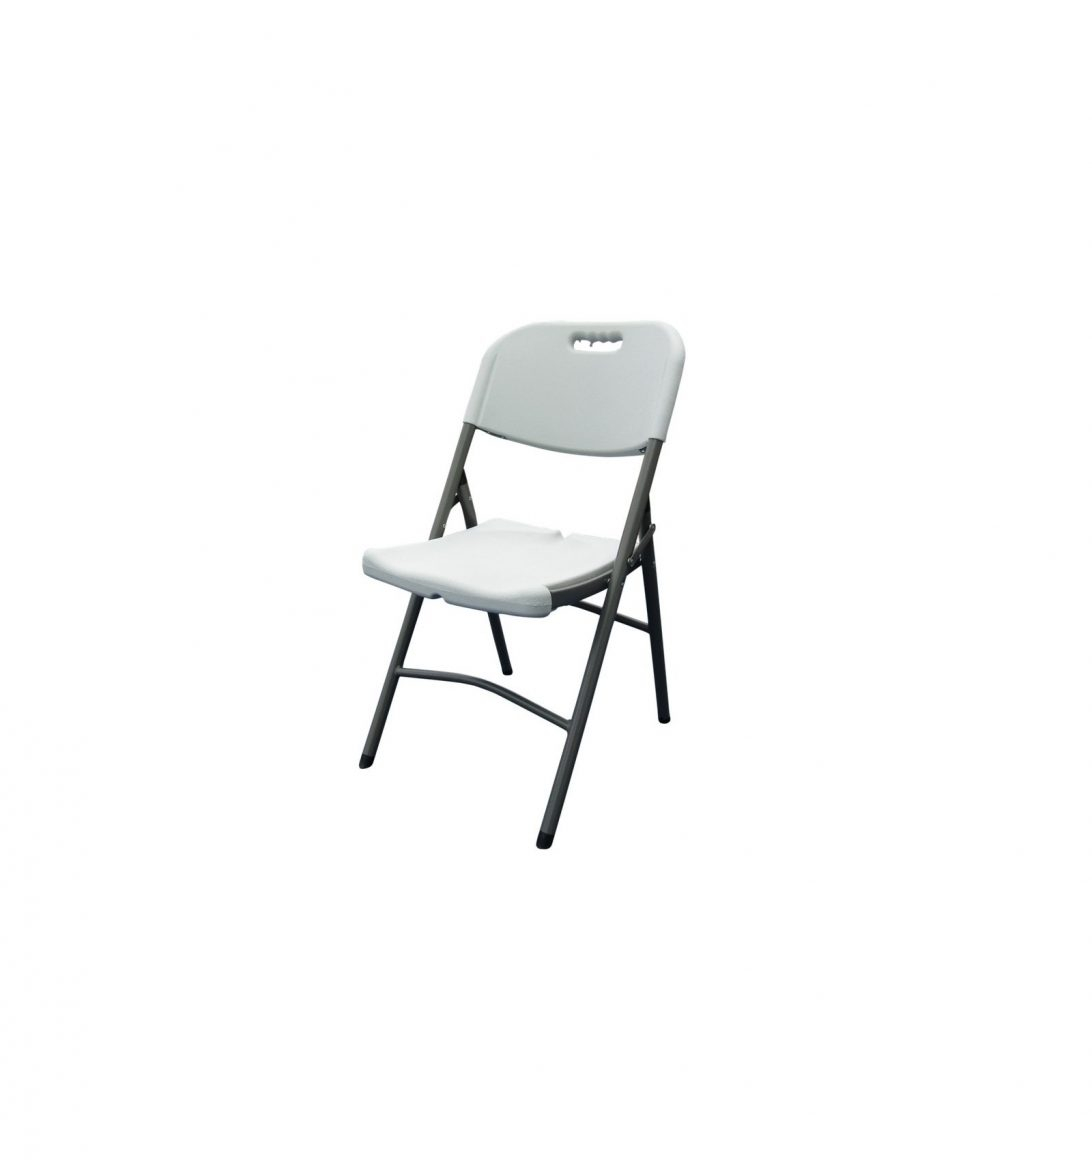 400 Lb Capacity Folding Chair Maxx Daddy Heavy Duty Camping pertaining to size 1092 X 1160